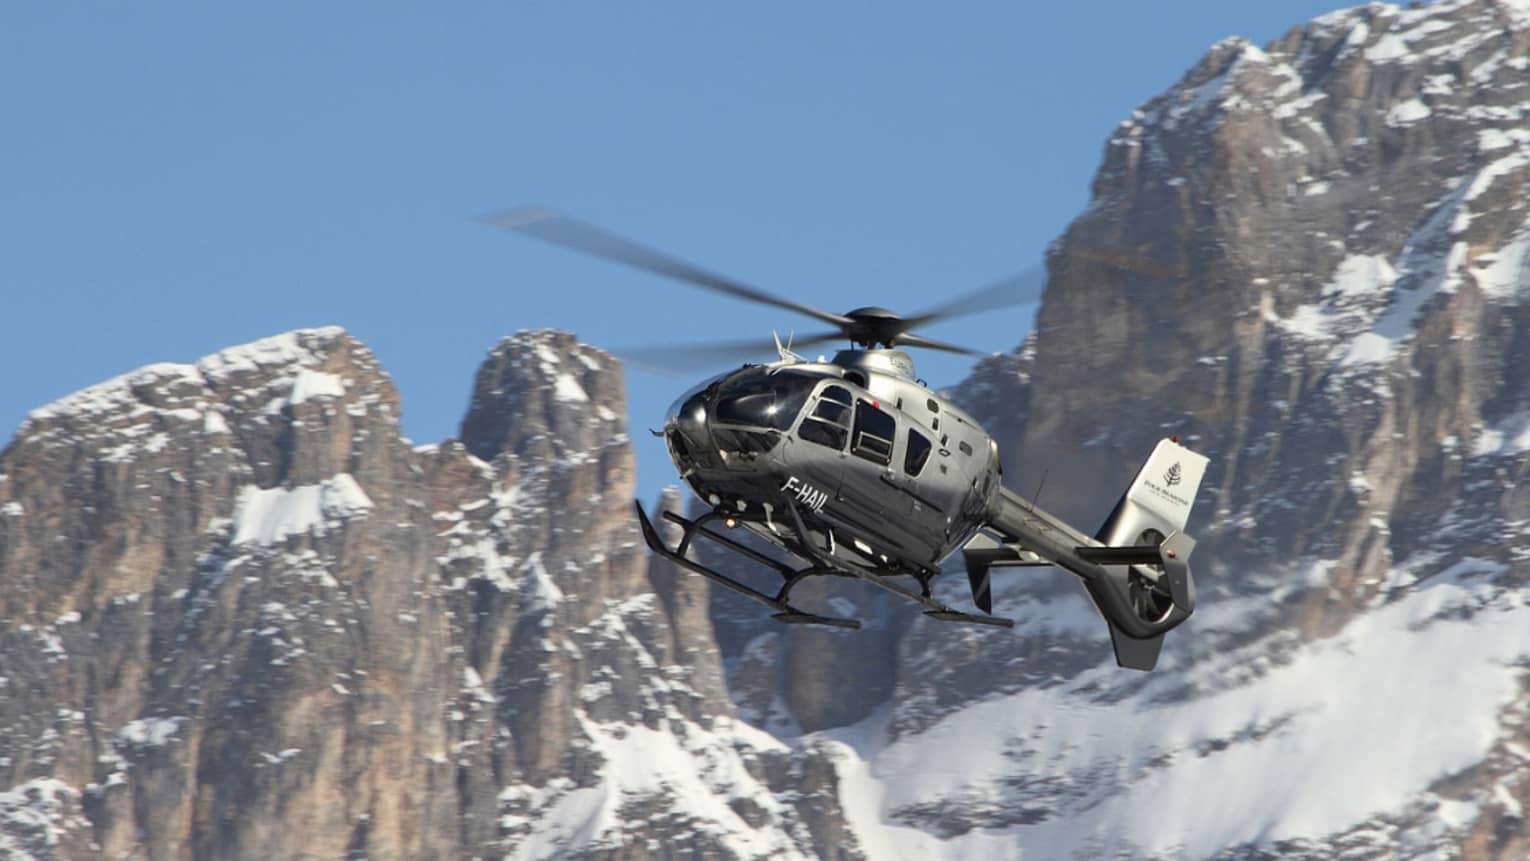 Silver helicopter ascending beside snowy, rocky mountain peaks